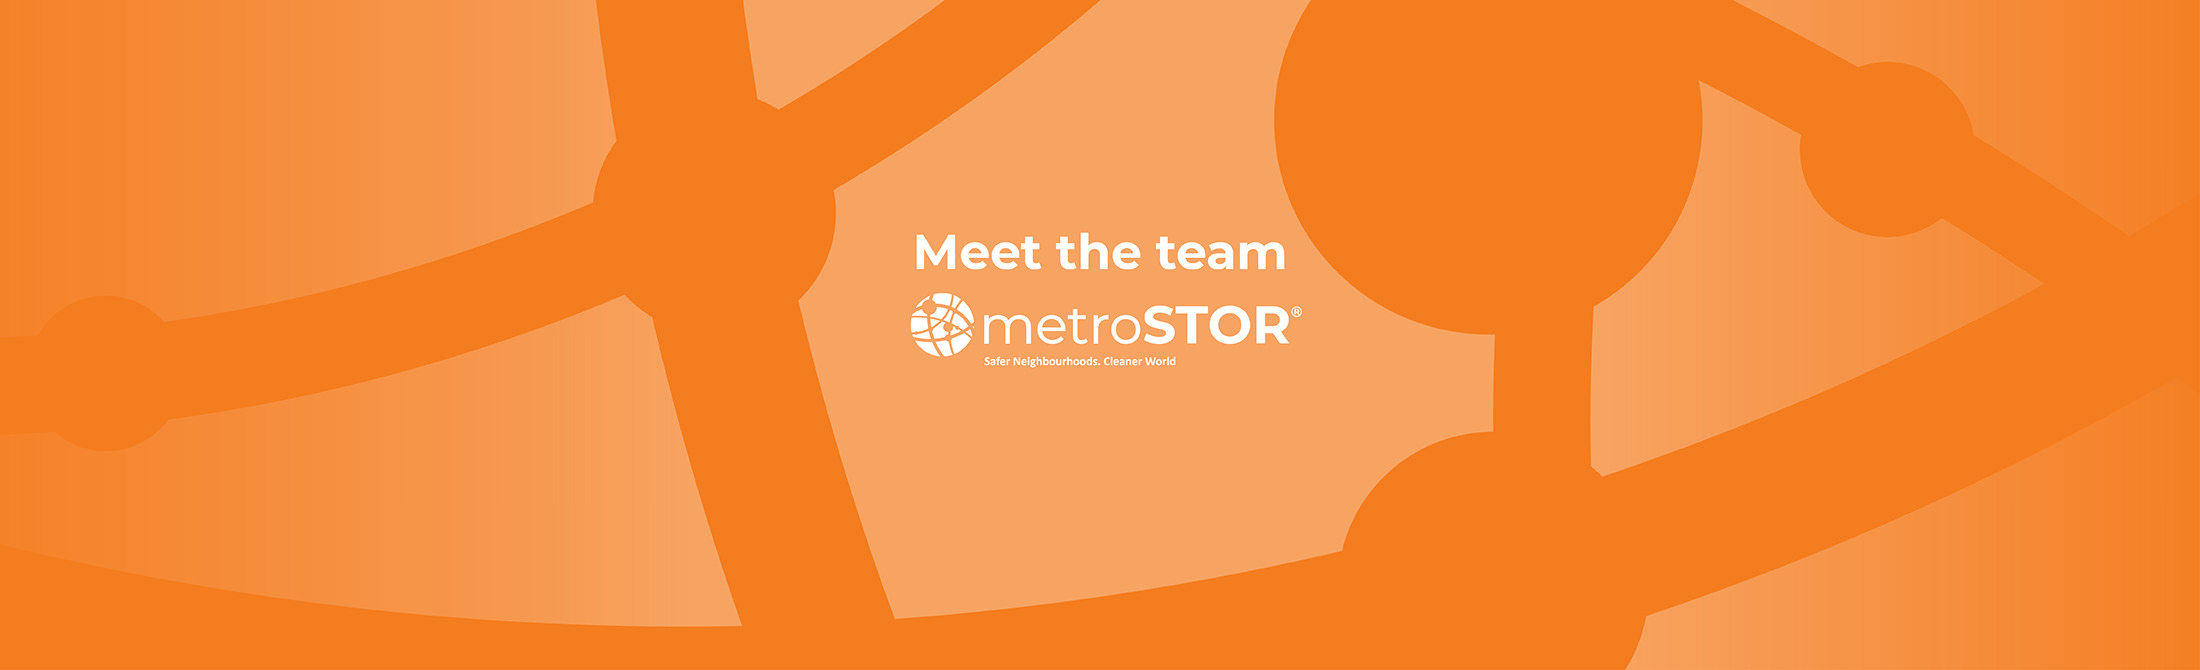 metroSTOR Meet the team image